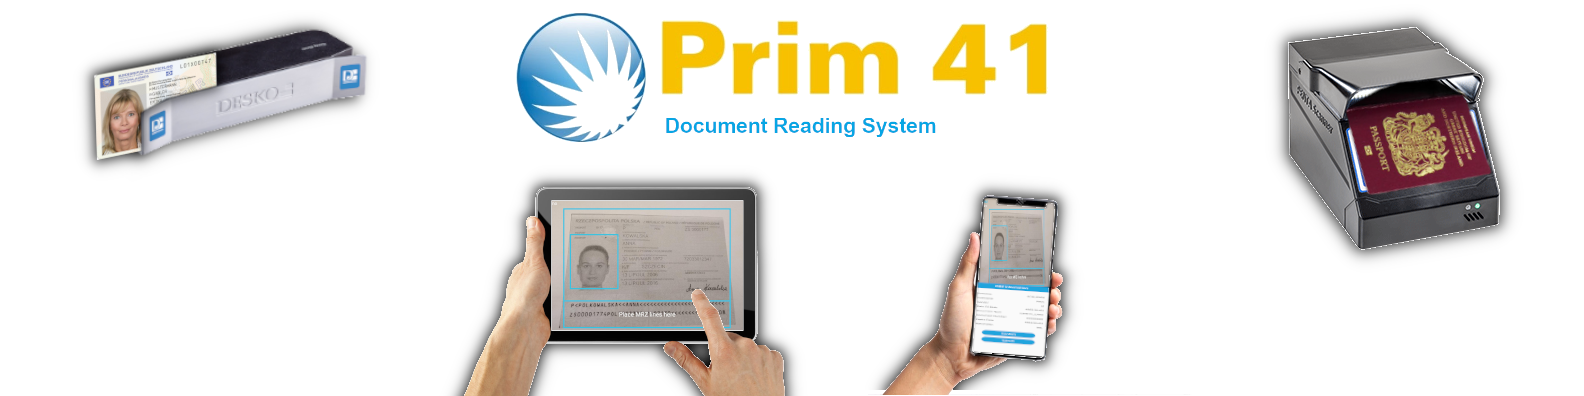 prim41-Document-Reading-System